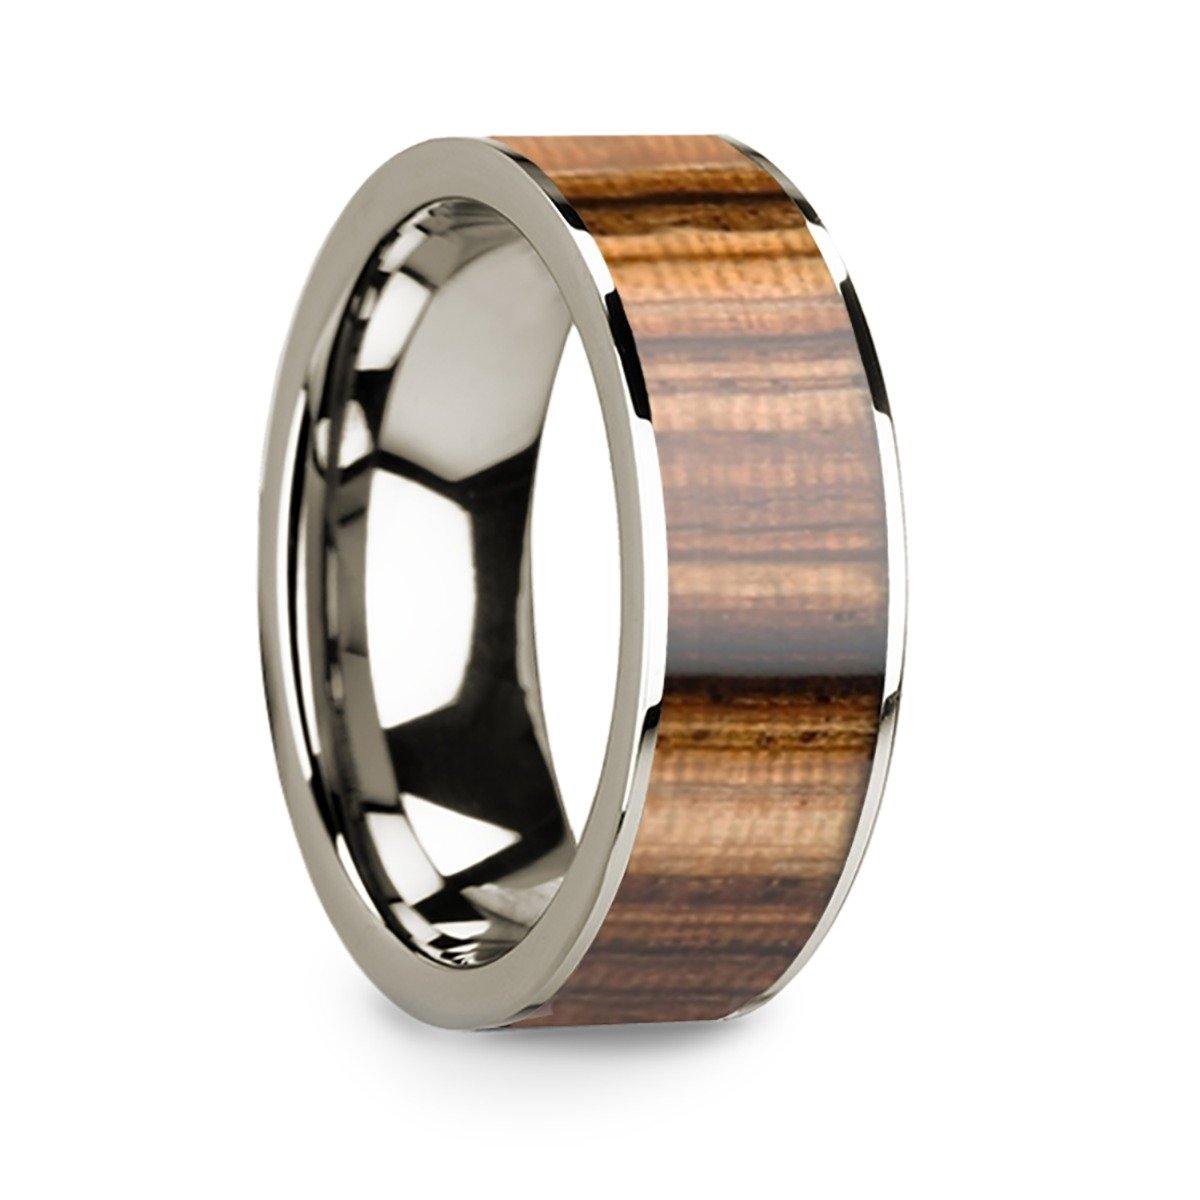 THAMES - Men’s Polished 14k White Gold & Zebra Wood Inlay Flat Wedding Ring - 8mm - The Rutile Ltd